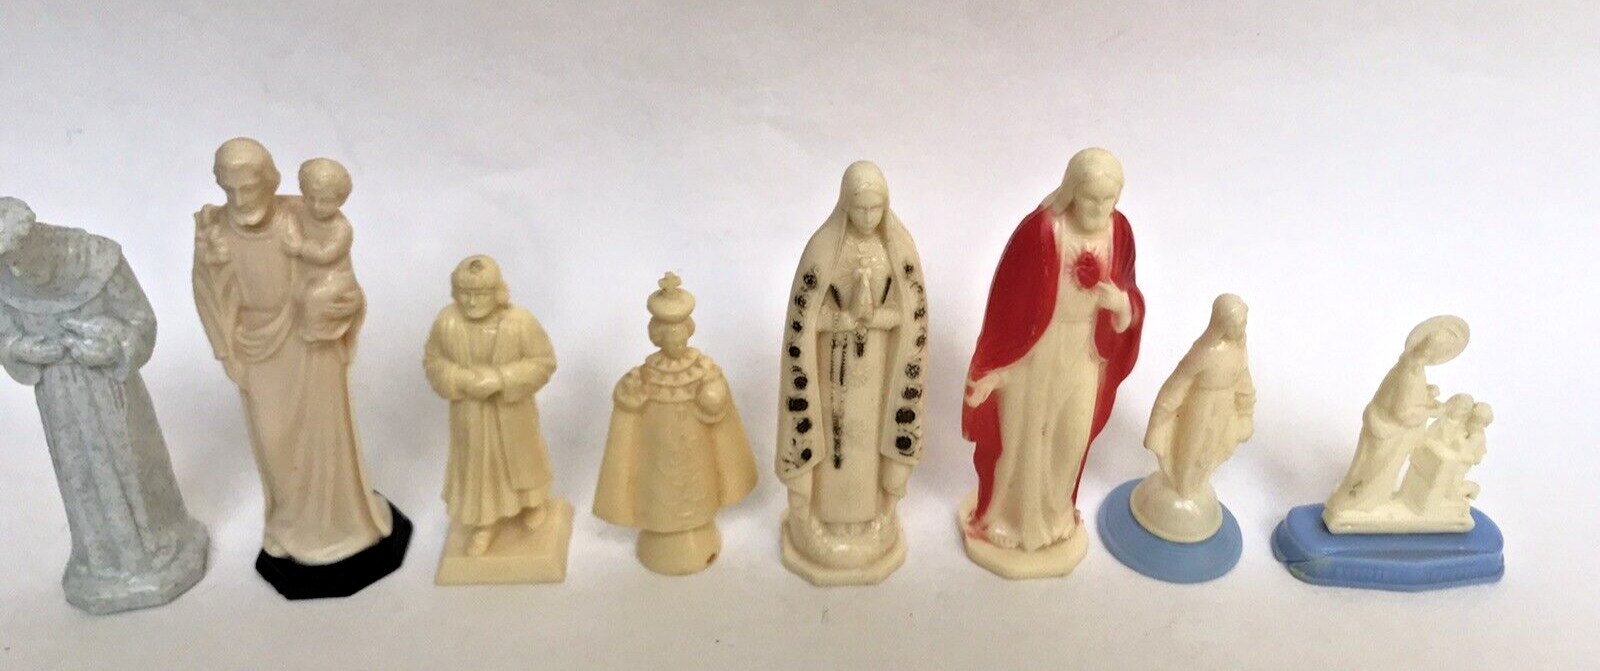 8 Sm Plastic Catholic Religious Statues Figures Saints Virgin Mary Sacred Heart